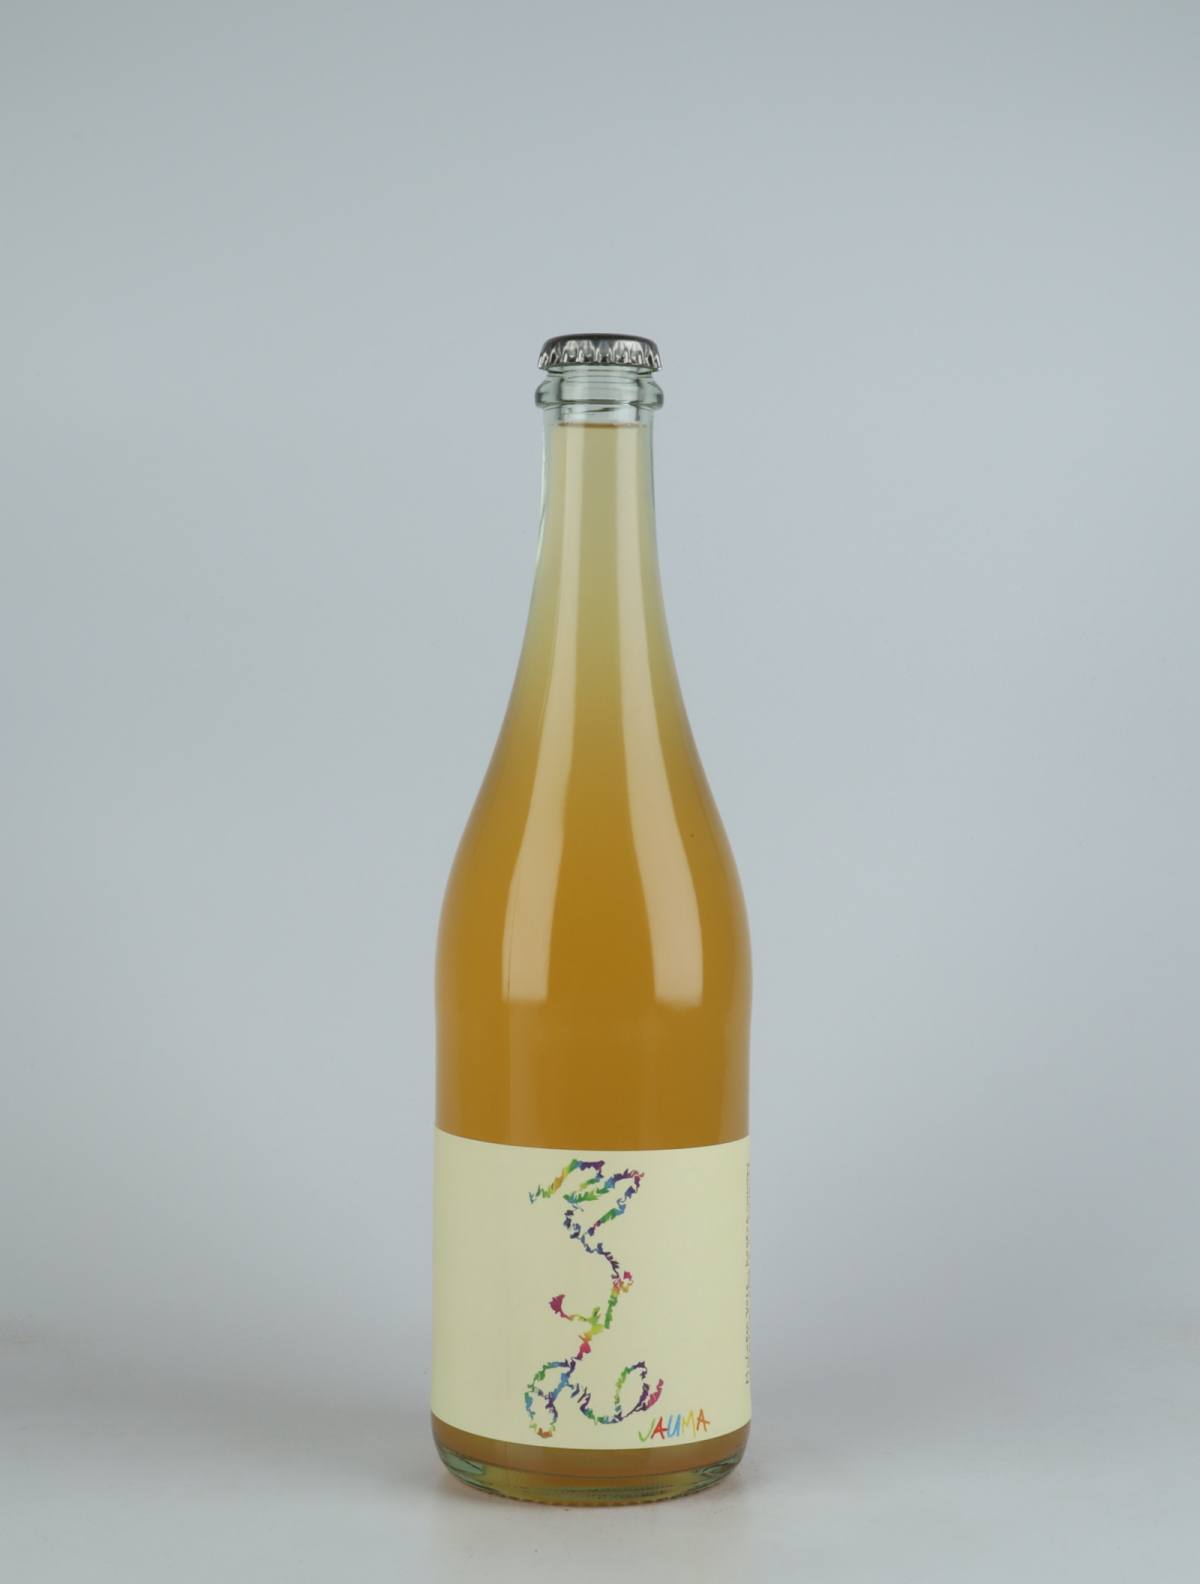 A bottle 2021 Arneis Orange wine from Jauma, Adelaide Hills in Australia